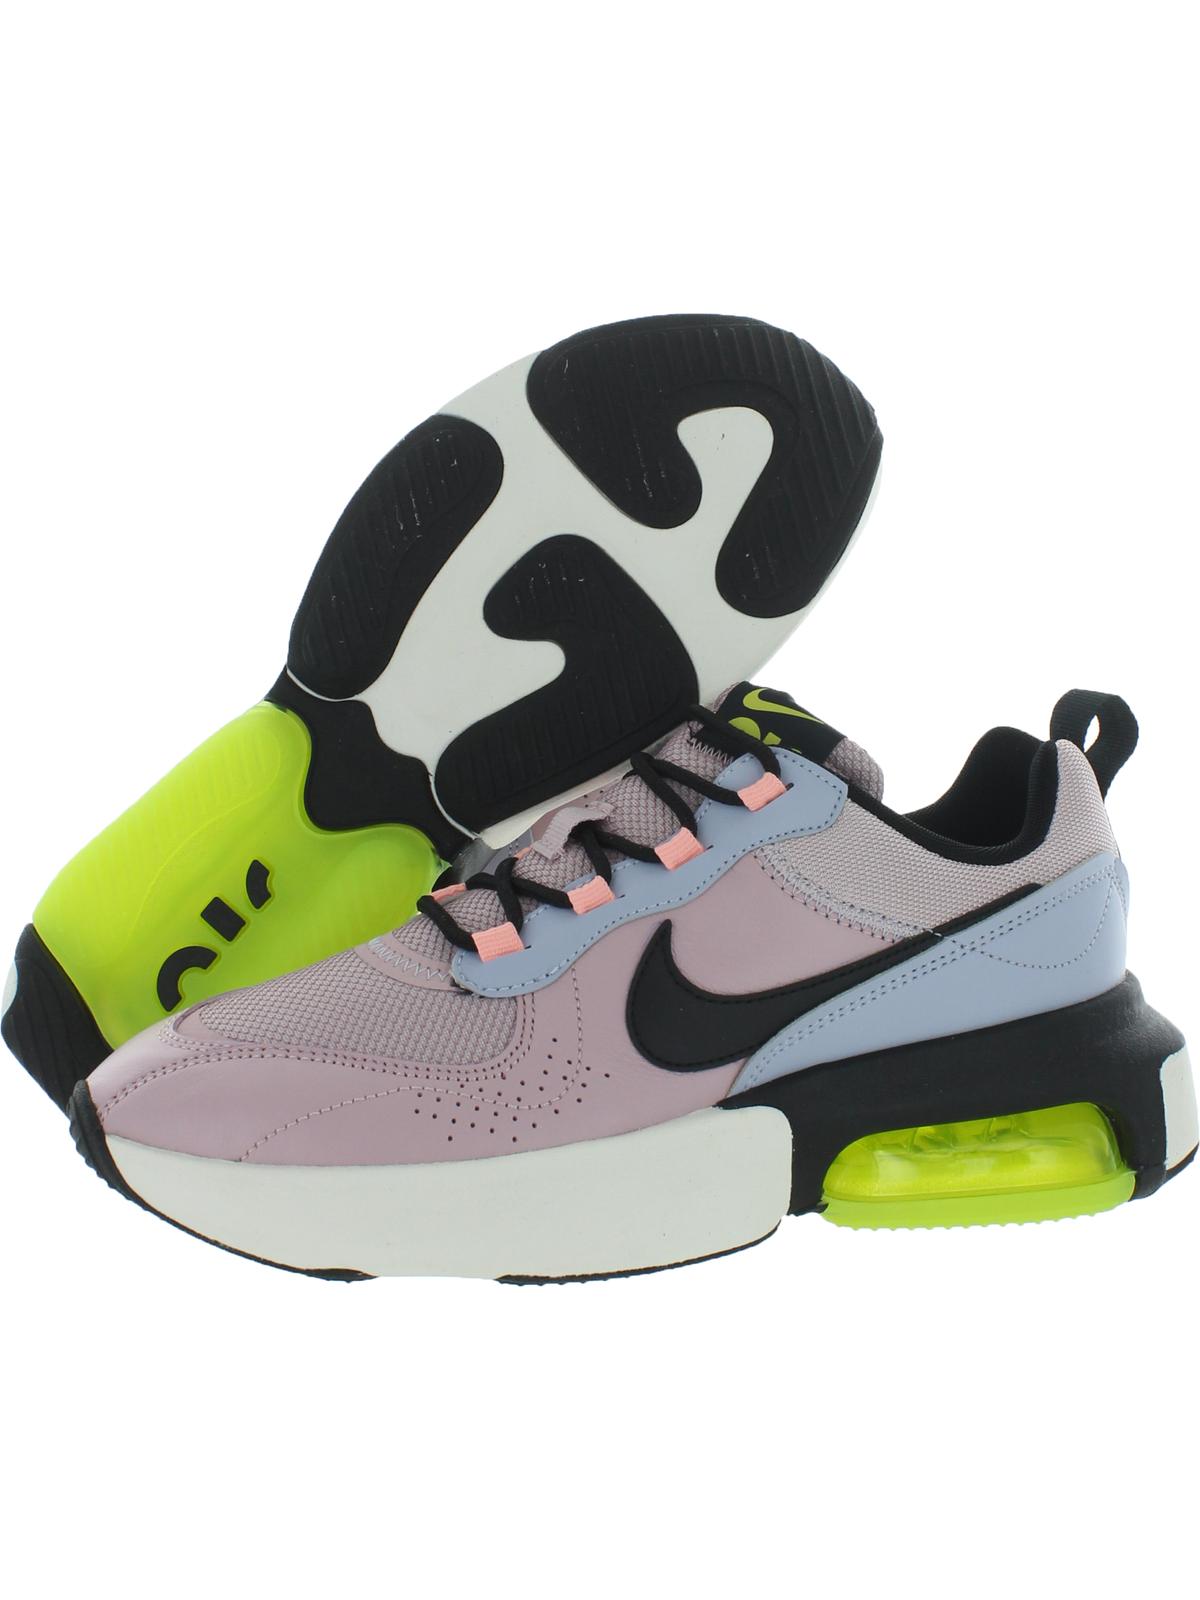 Nike Womens Air Max Verona Lifestyle Gym Athletic Shoes Pink 8 Medium (B,M) - image 2 of 2